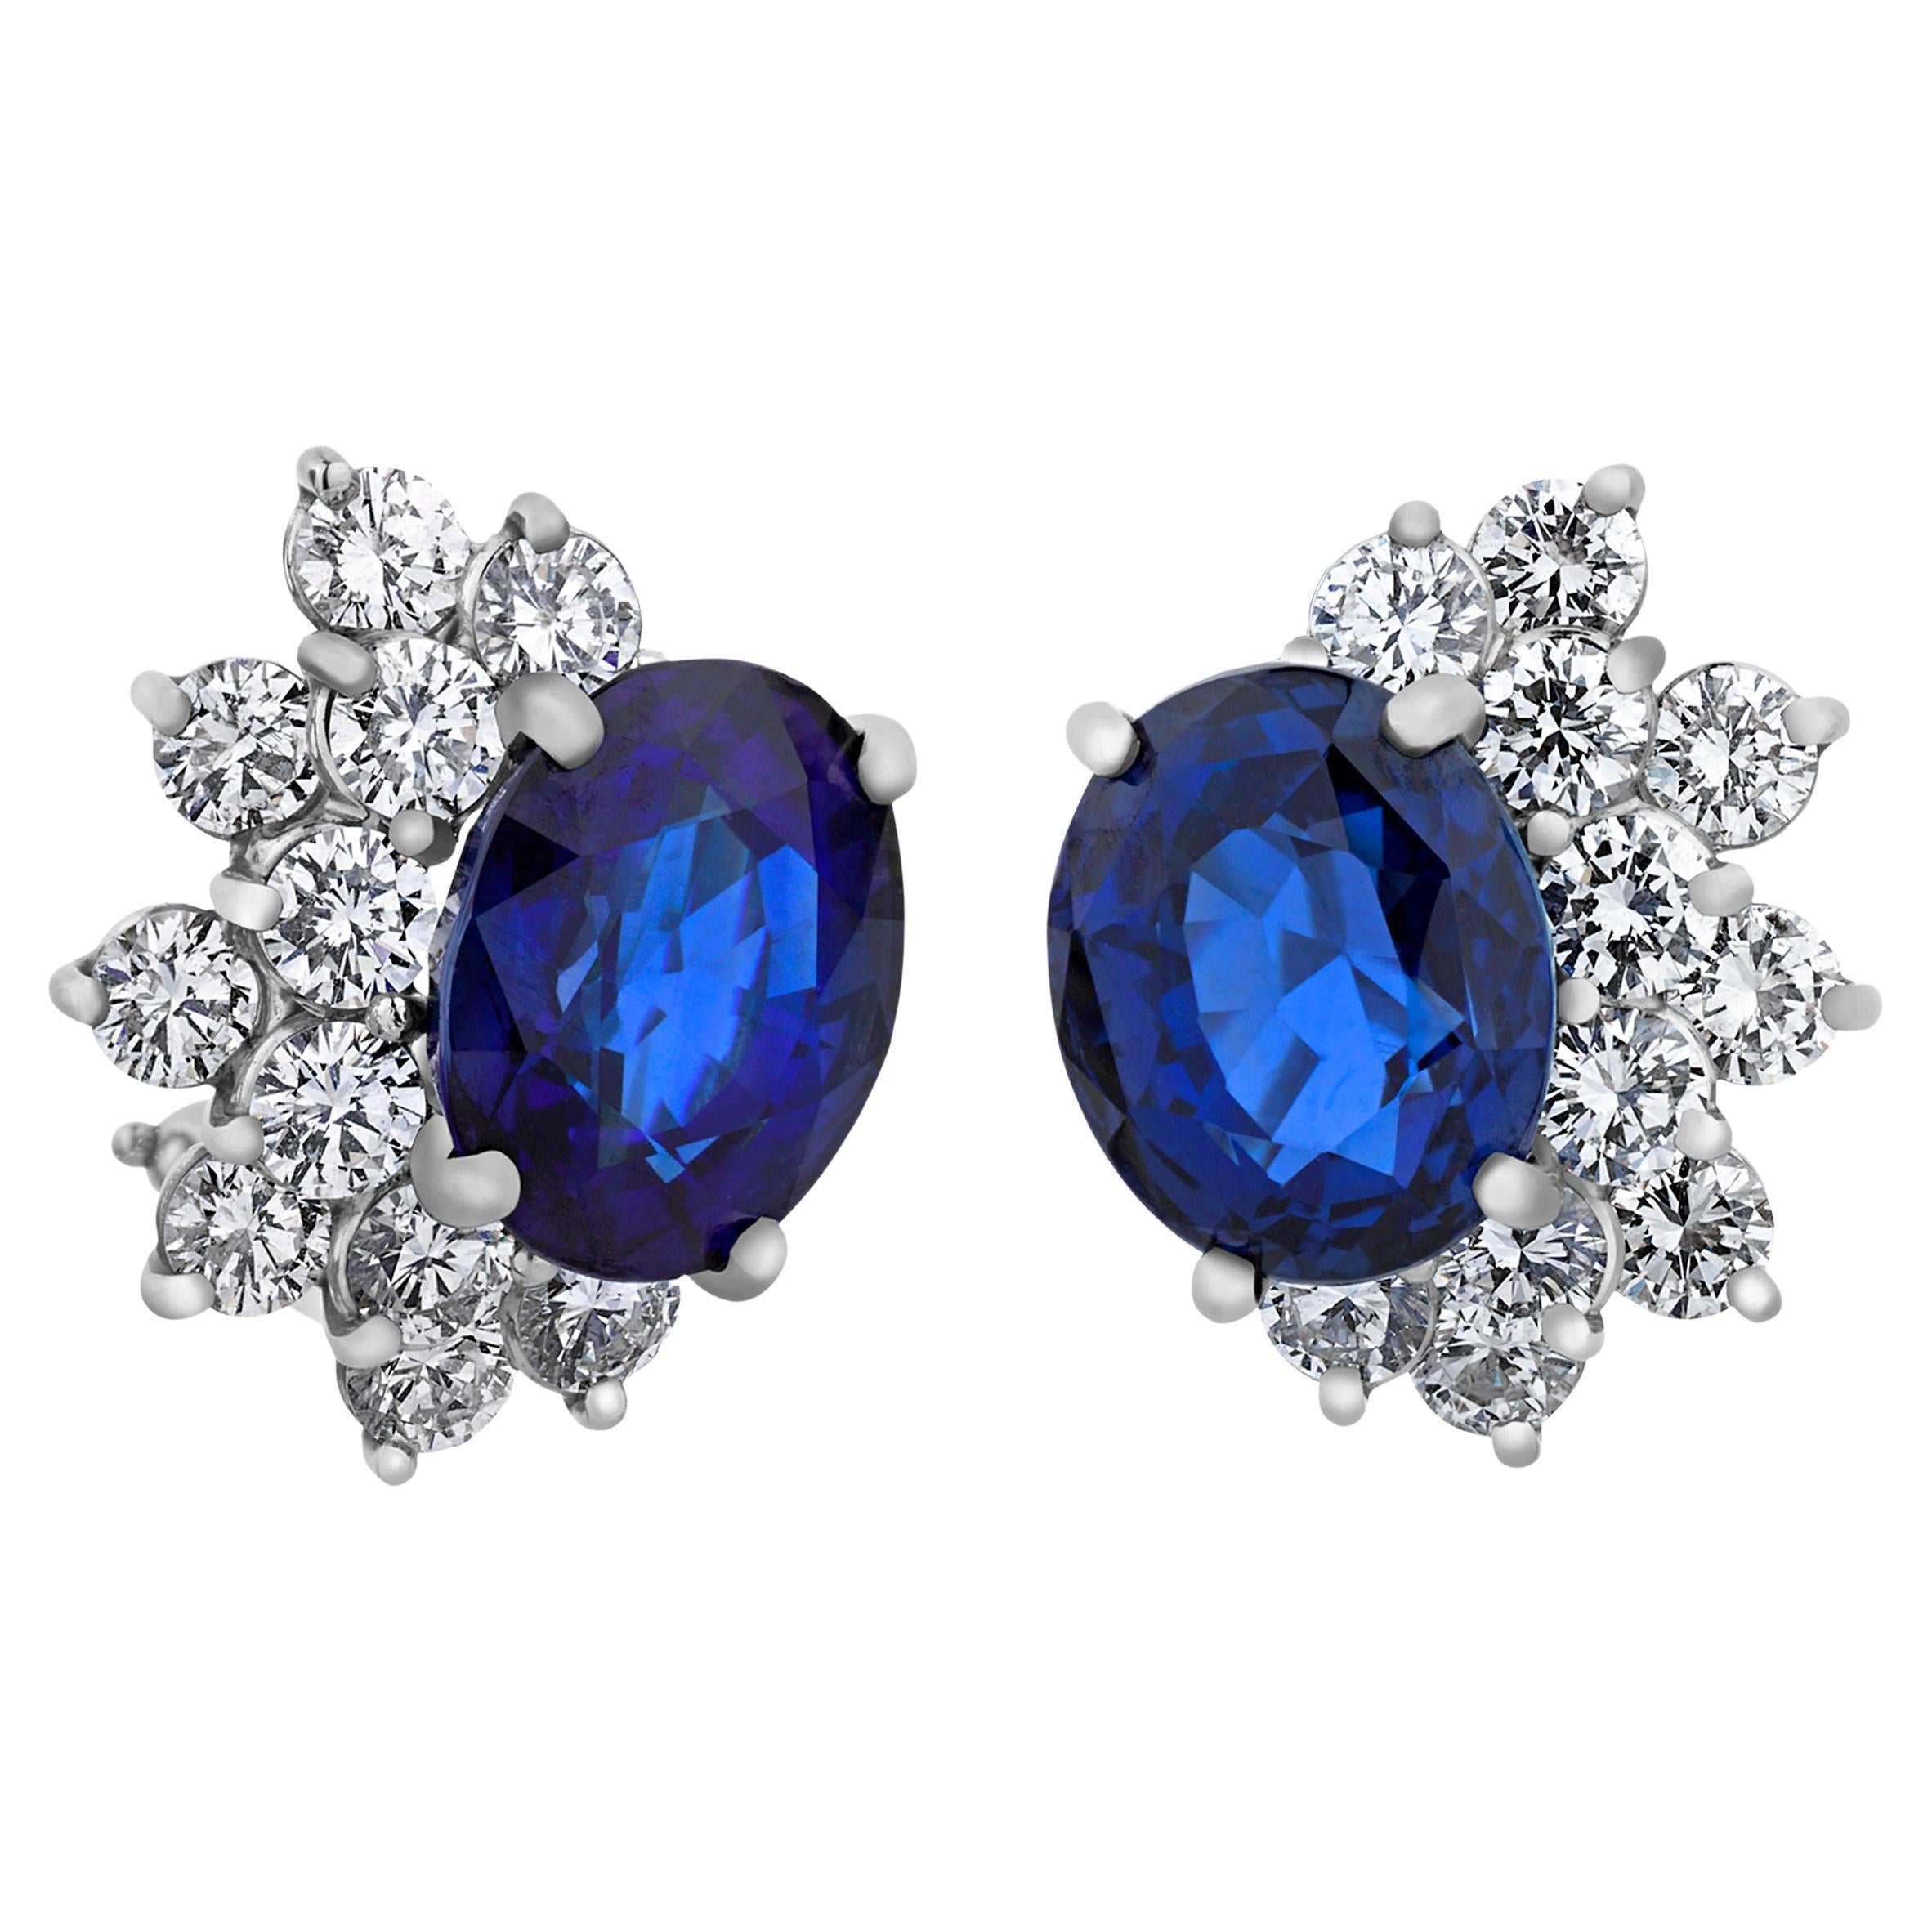 Tiffany & Co. Sapphire Earrings, 8.00 Carats